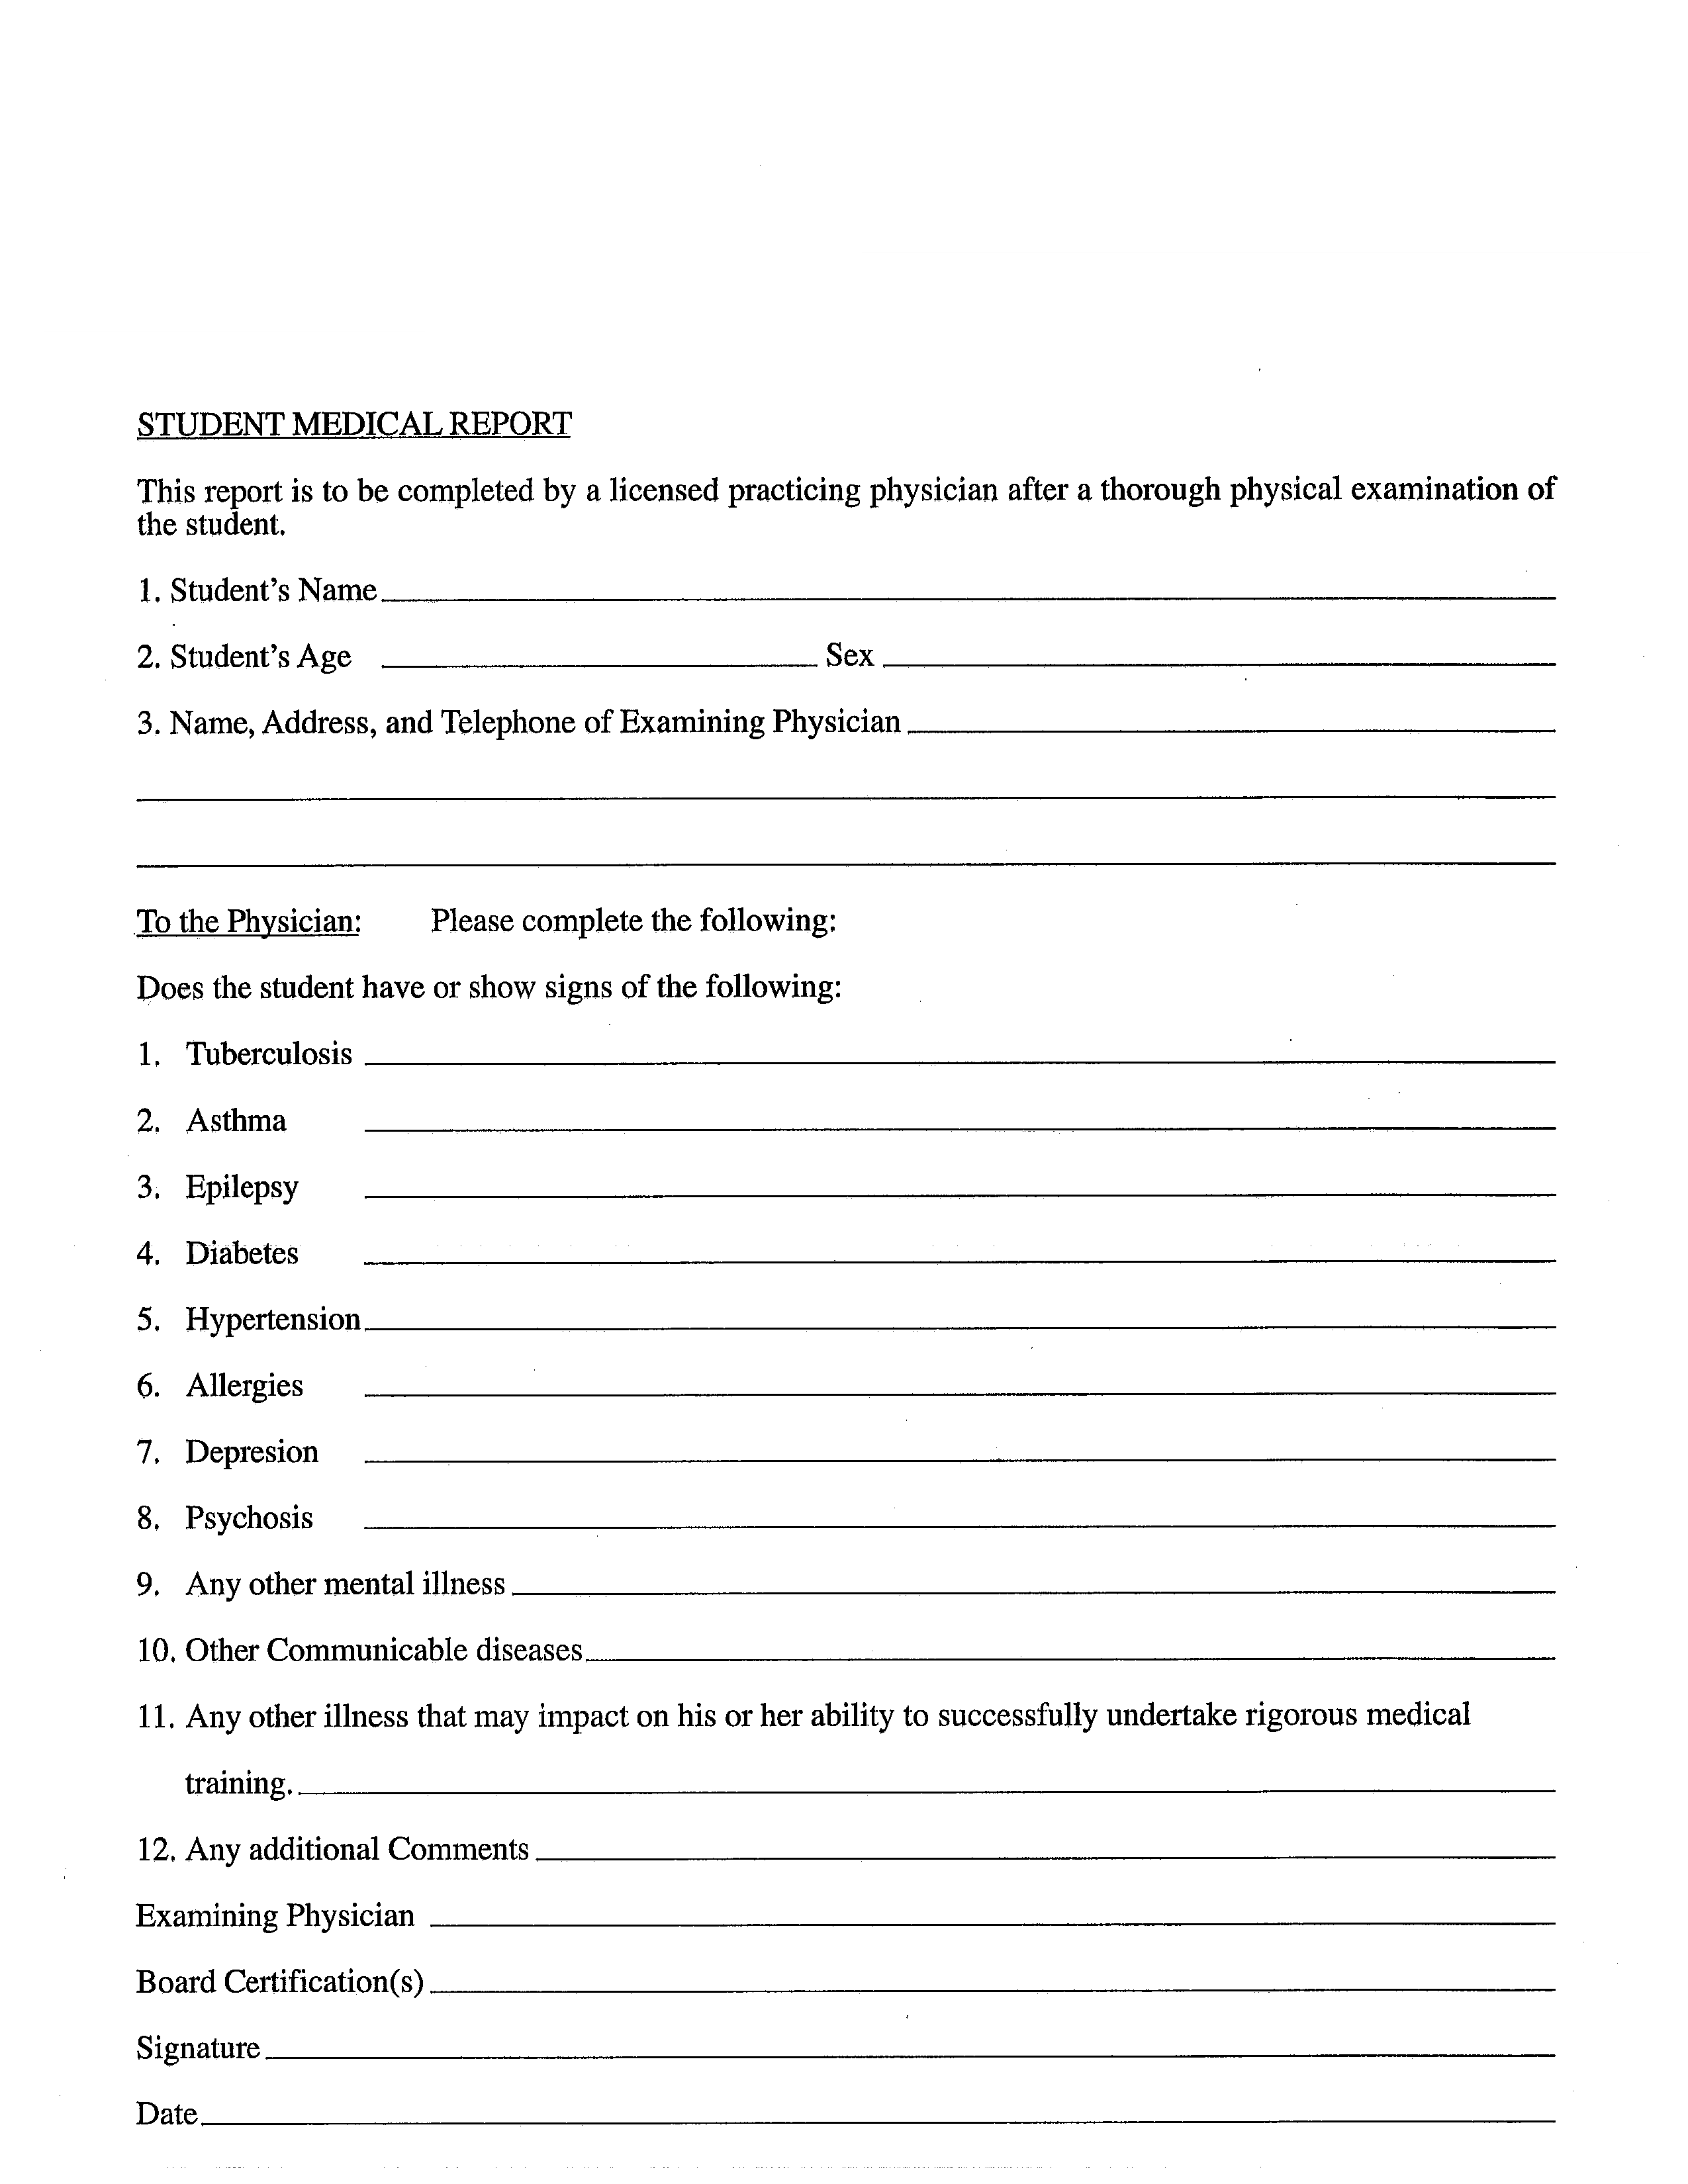 Student Medical Report Form 模板